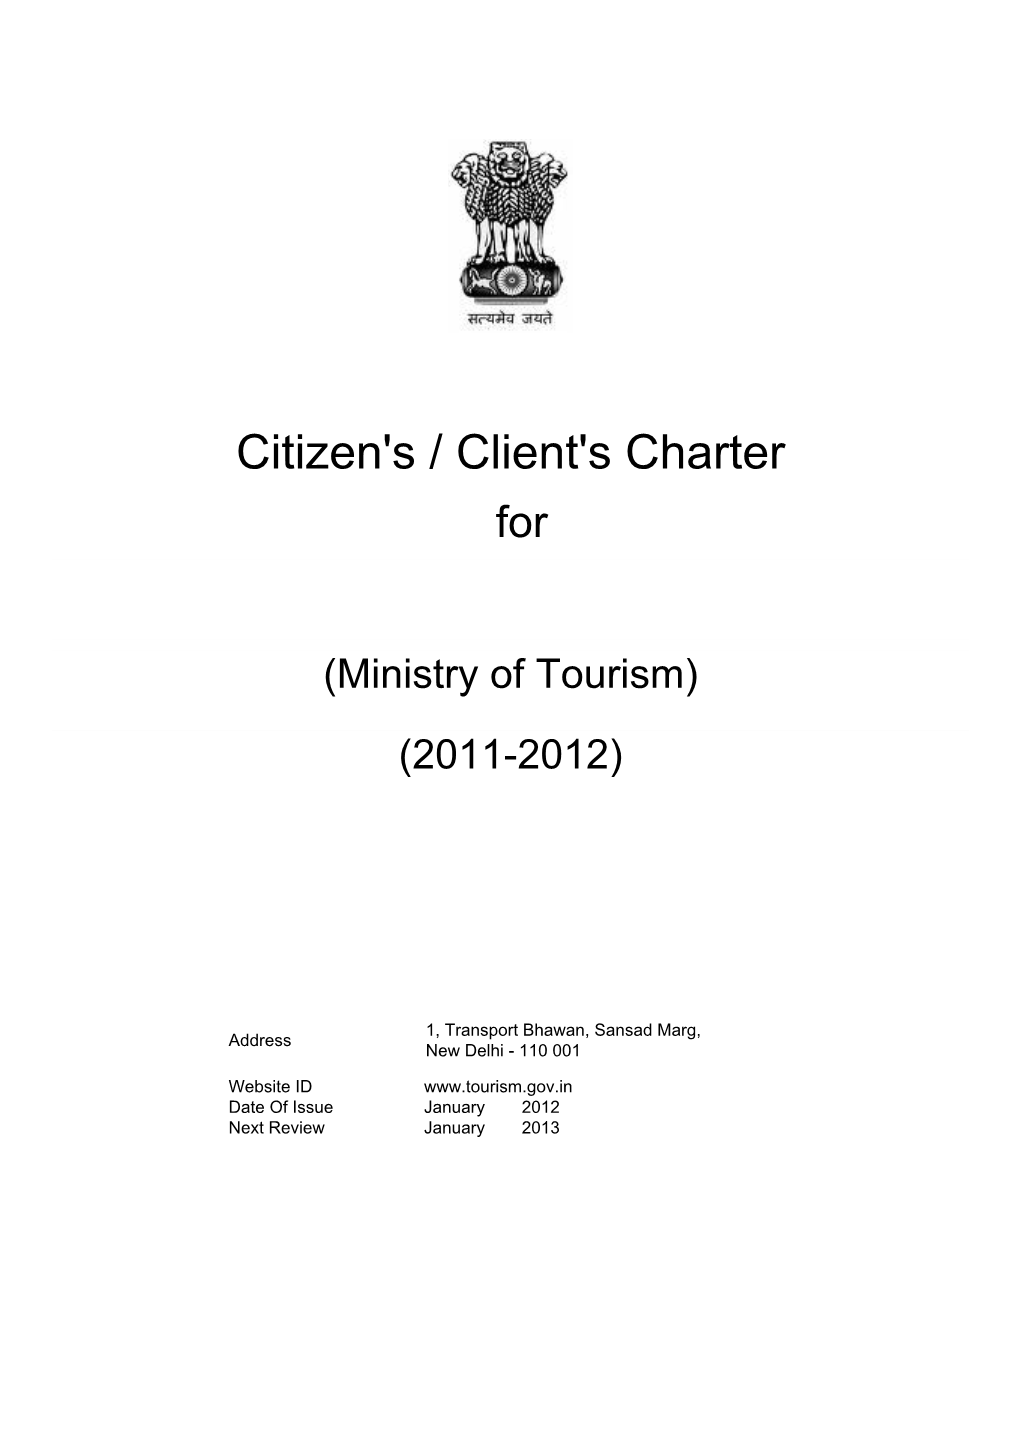 Citizen's / Client's Charter For